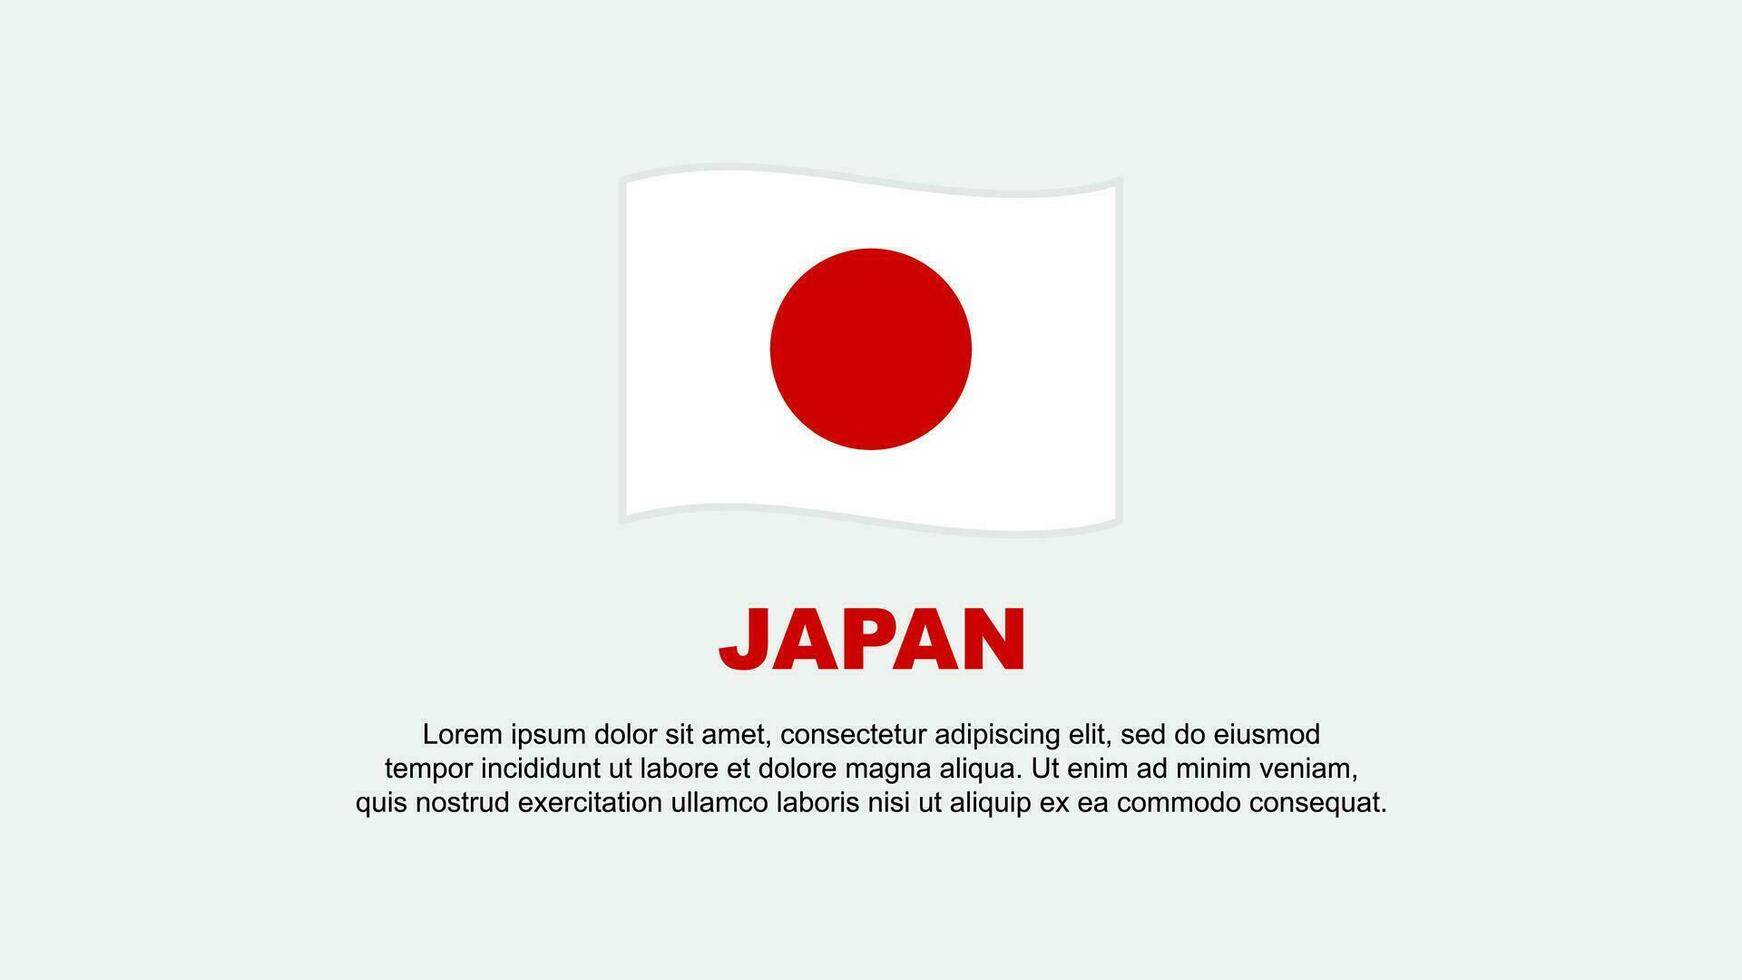 Japan Flag Abstract Background Design Template. Japan Independence Day Banner Social Media Vector Illustration. Japan Background